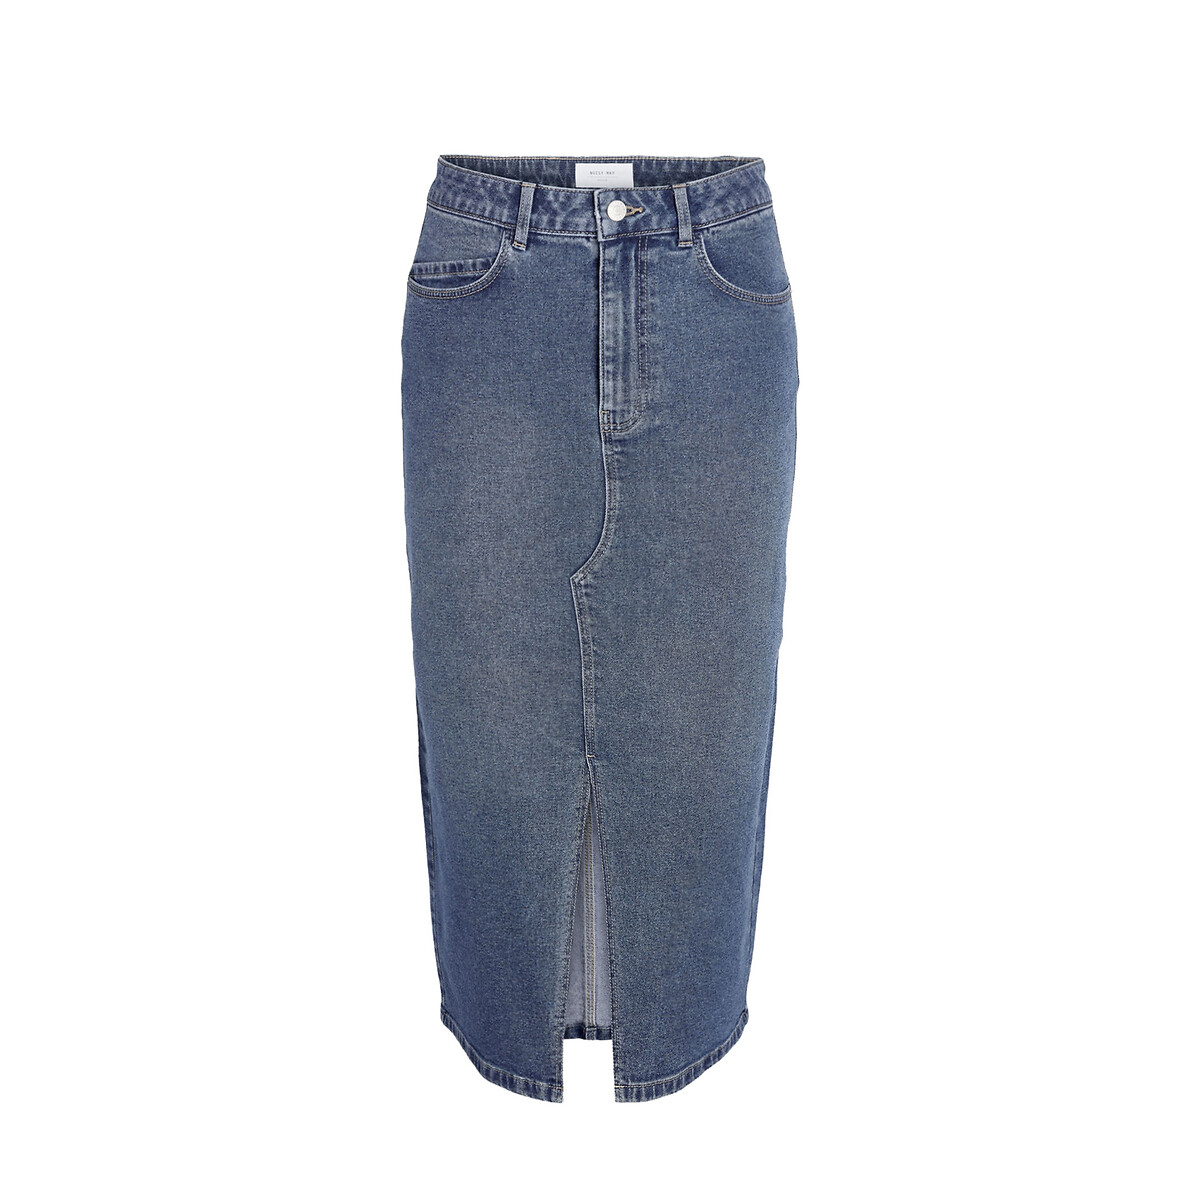 цена Юбка-миди из джинсовой ткани XS синий